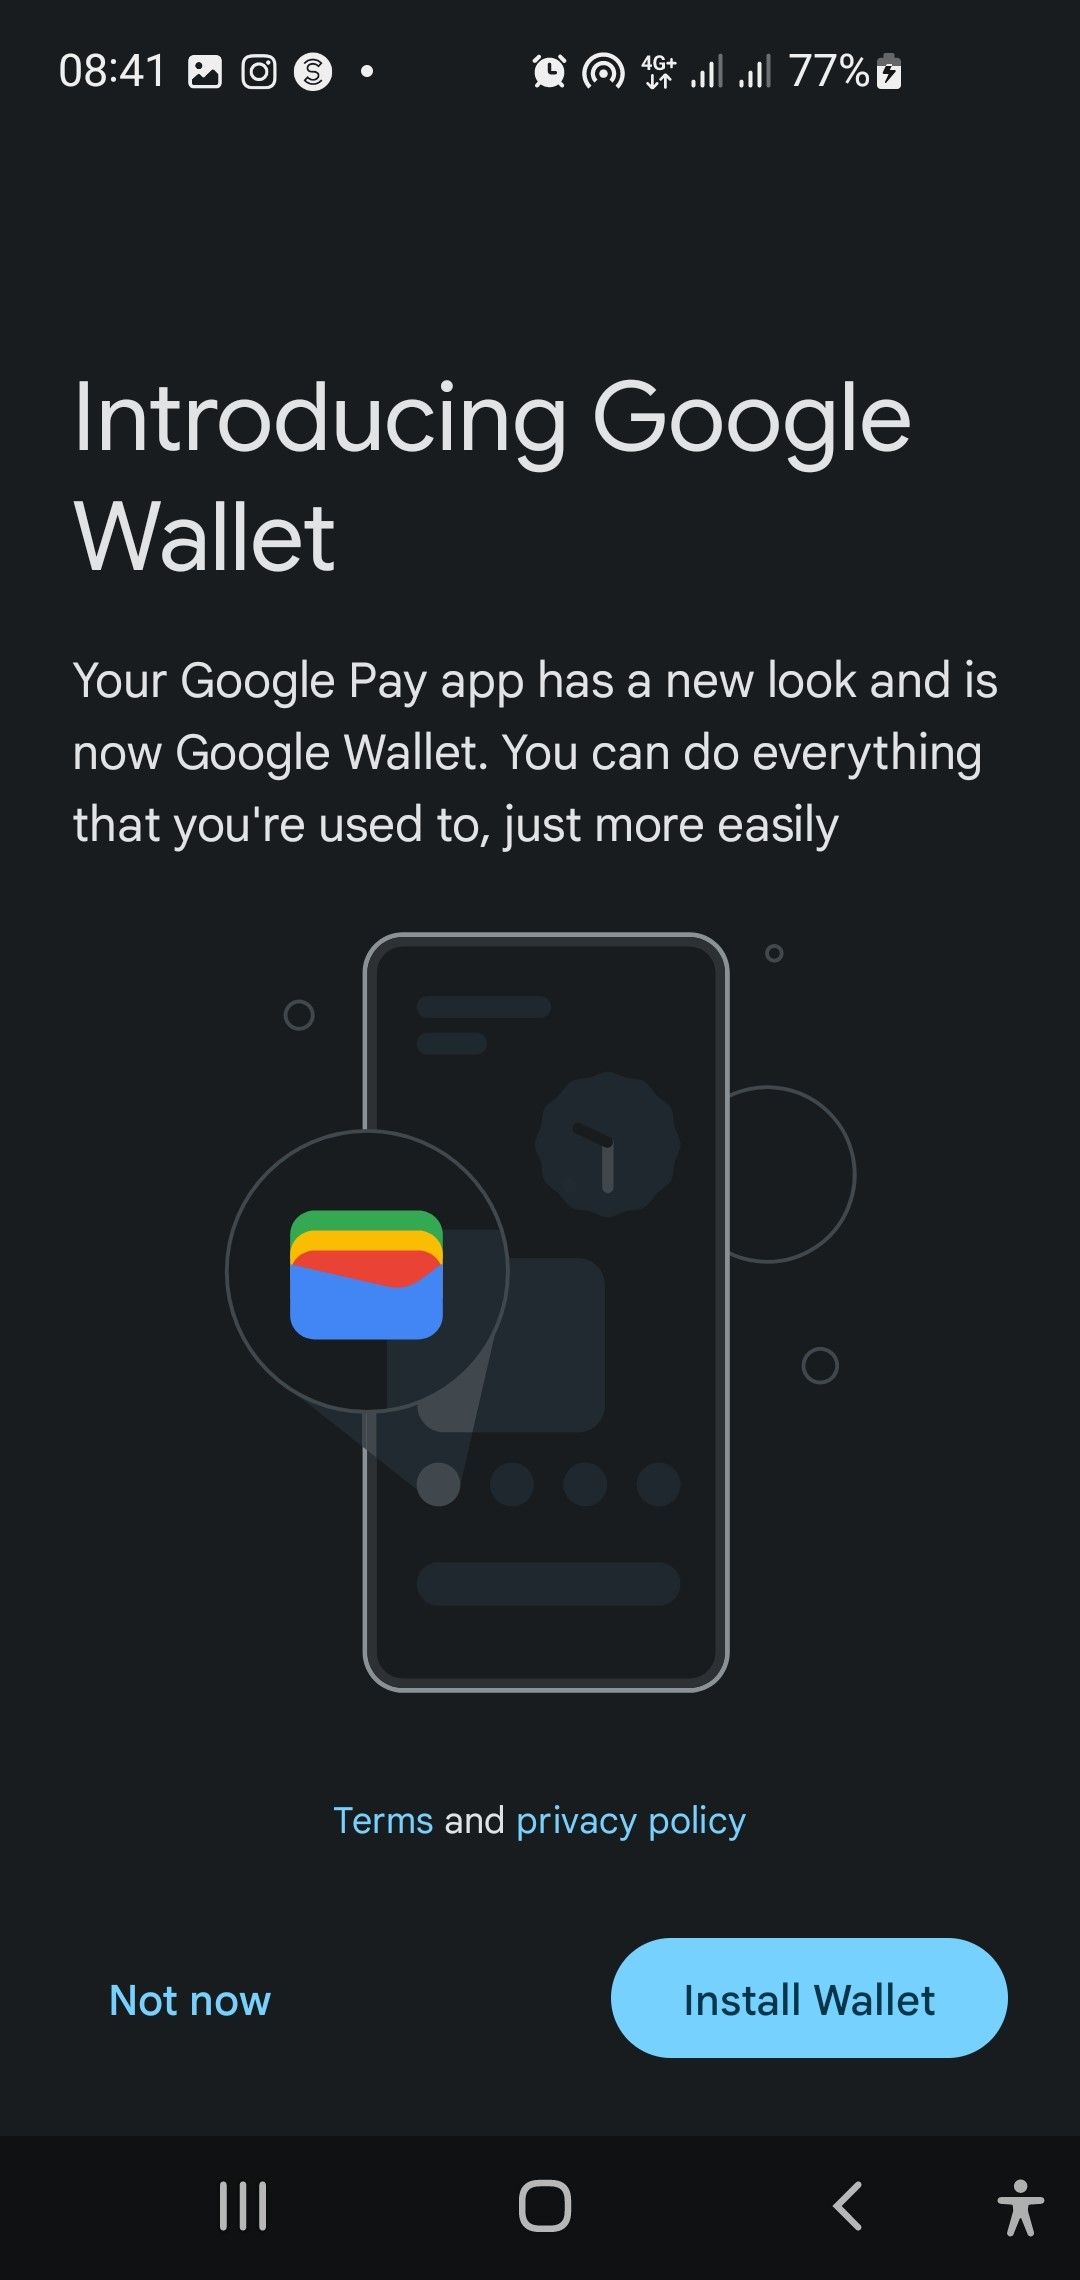 An ad introducing Google Wallet